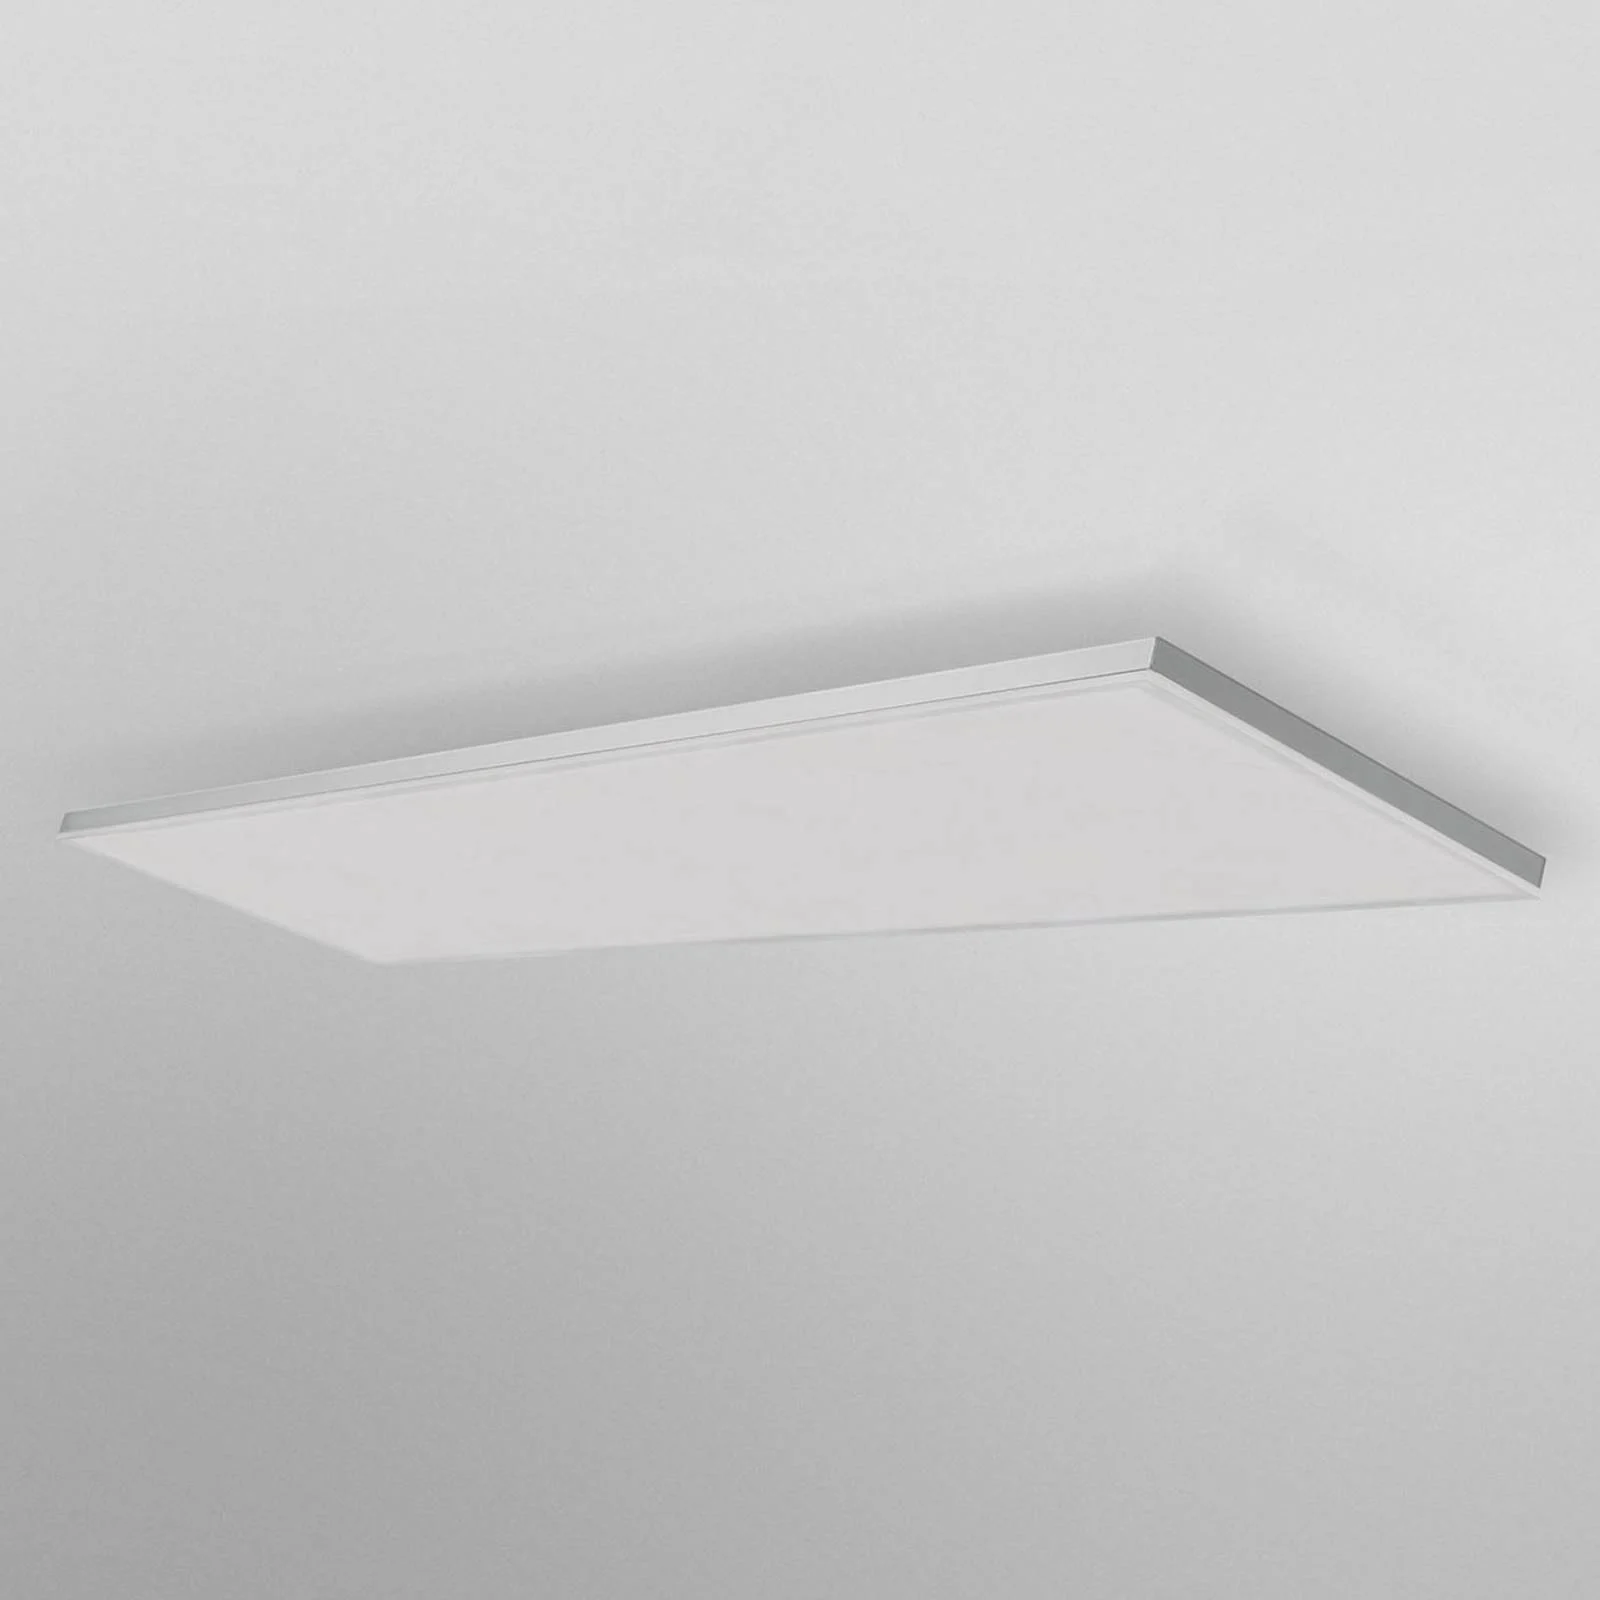 LEDVANCE SMART+ WiFi Planon LED-Panel CCT 120x30cm günstig online kaufen